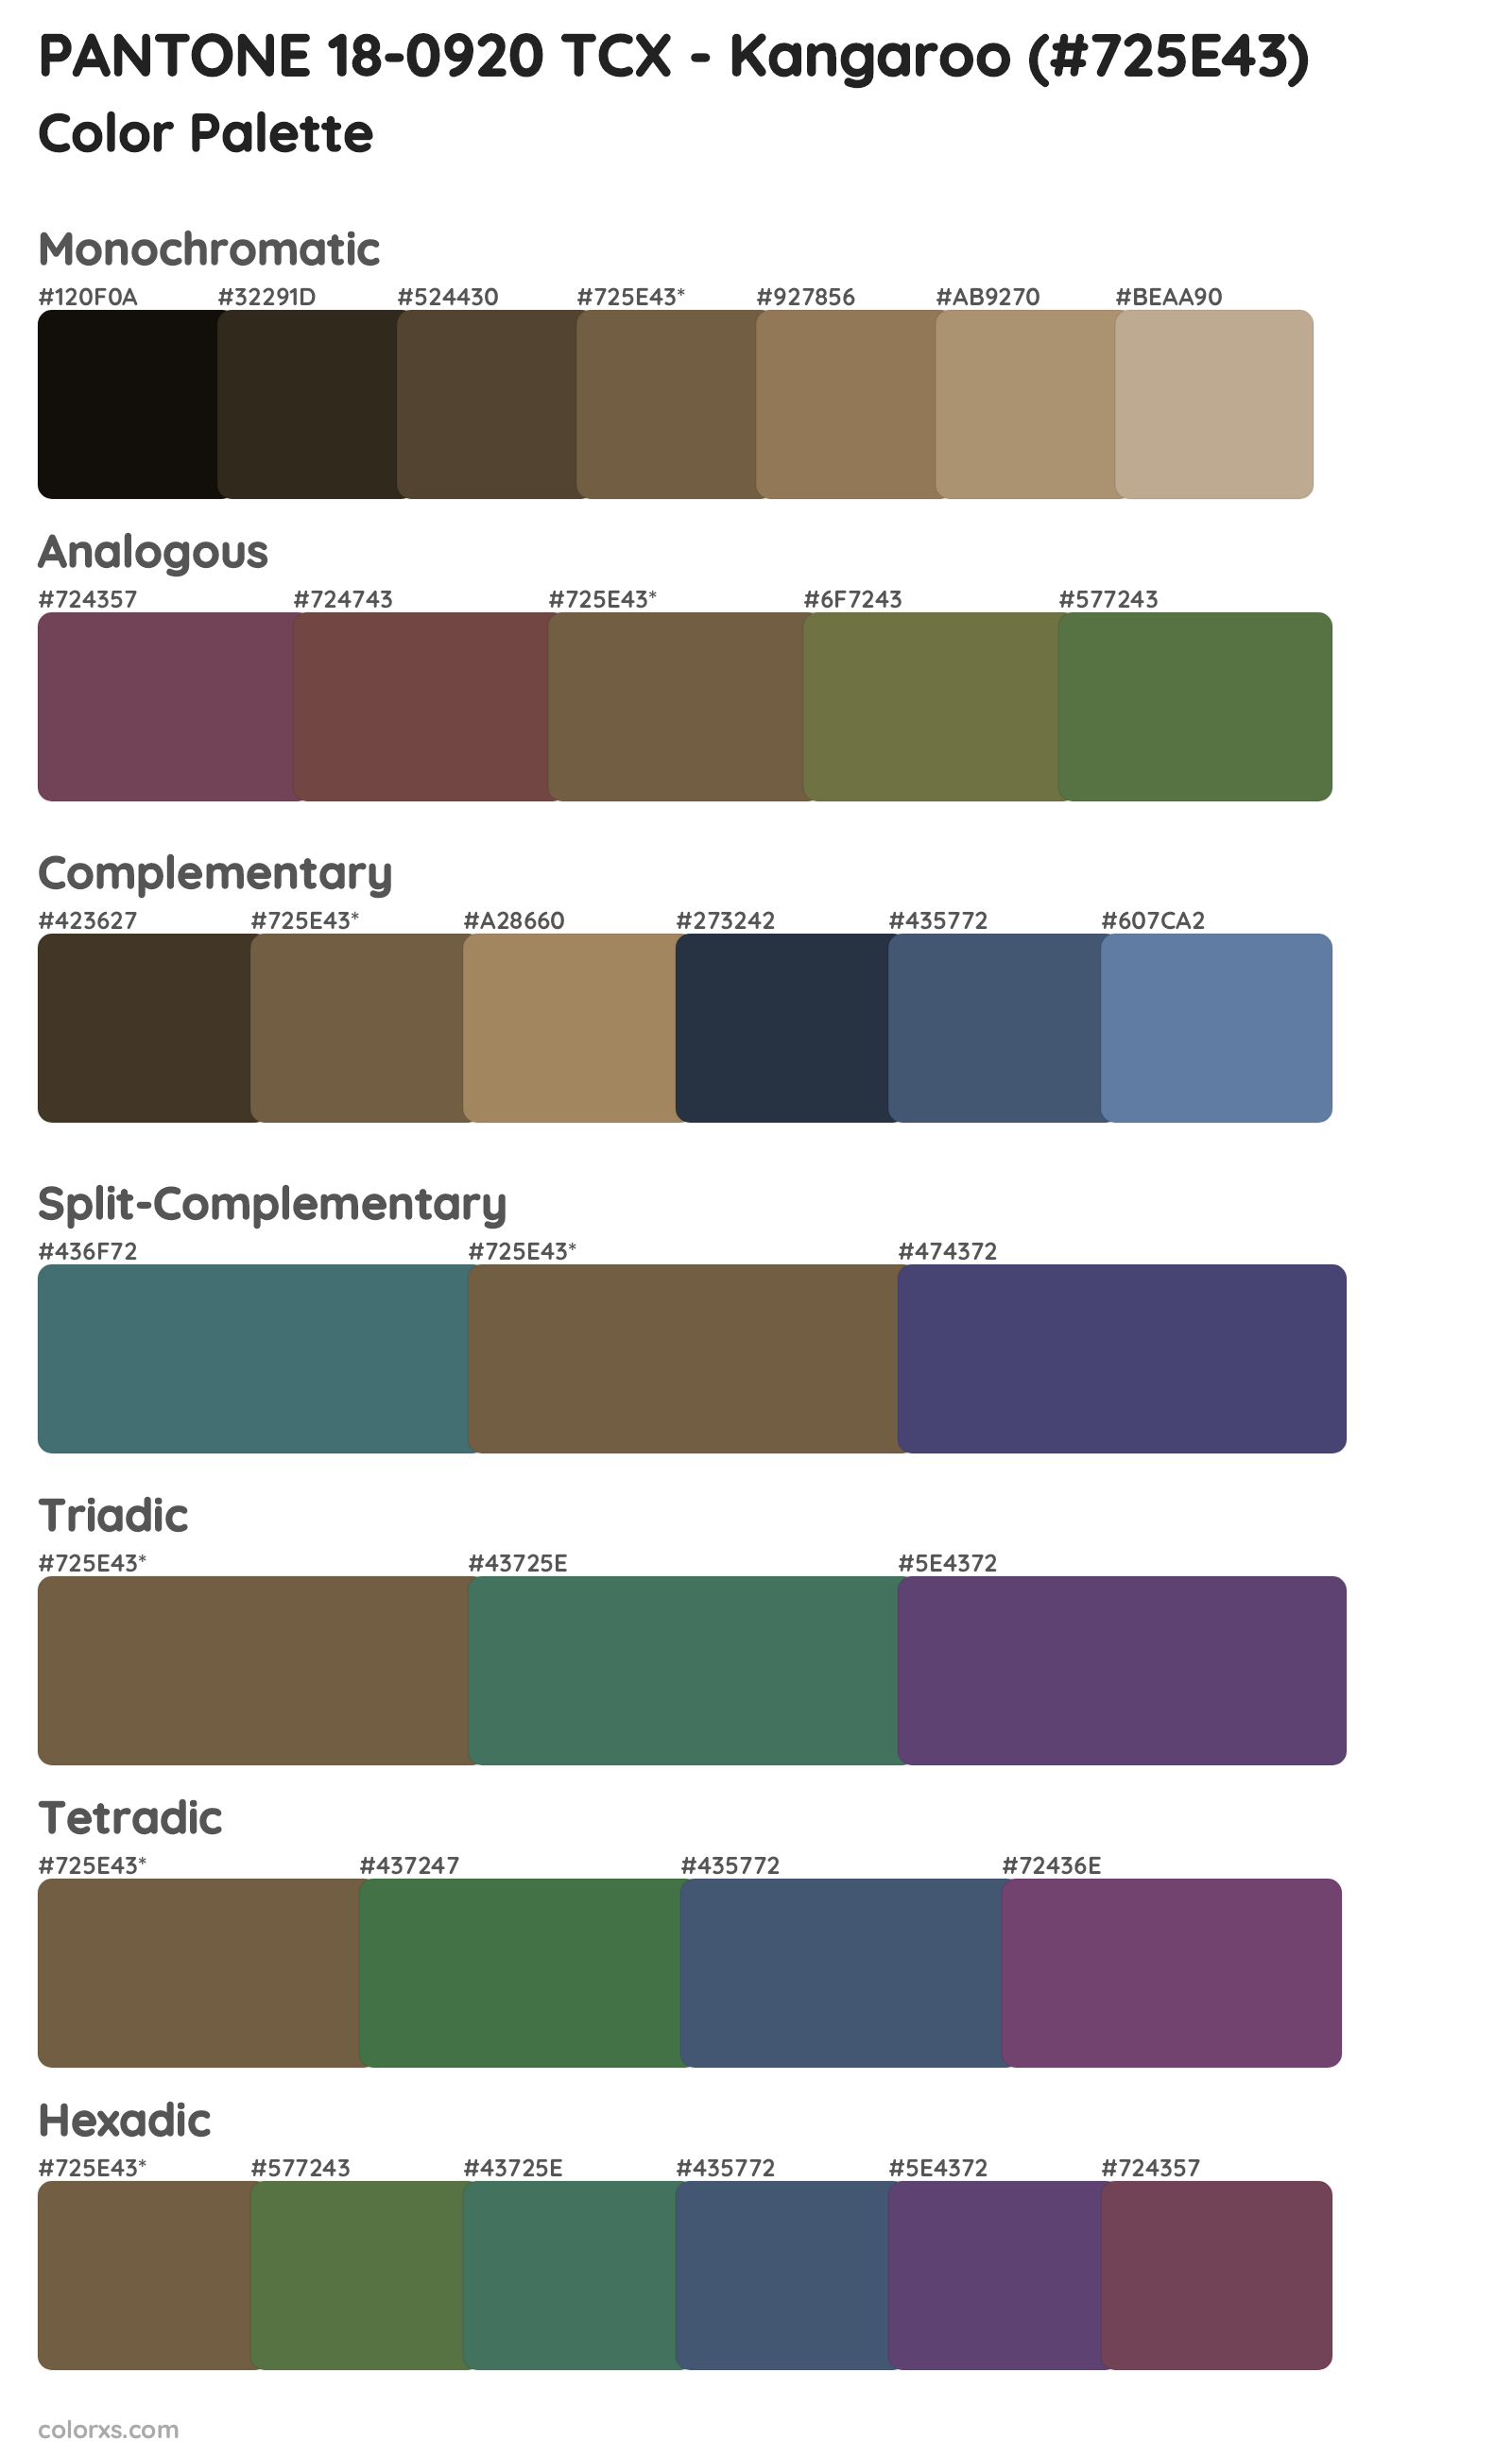 PANTONE 18-0920 TCX - Kangaroo Color Scheme Palettes